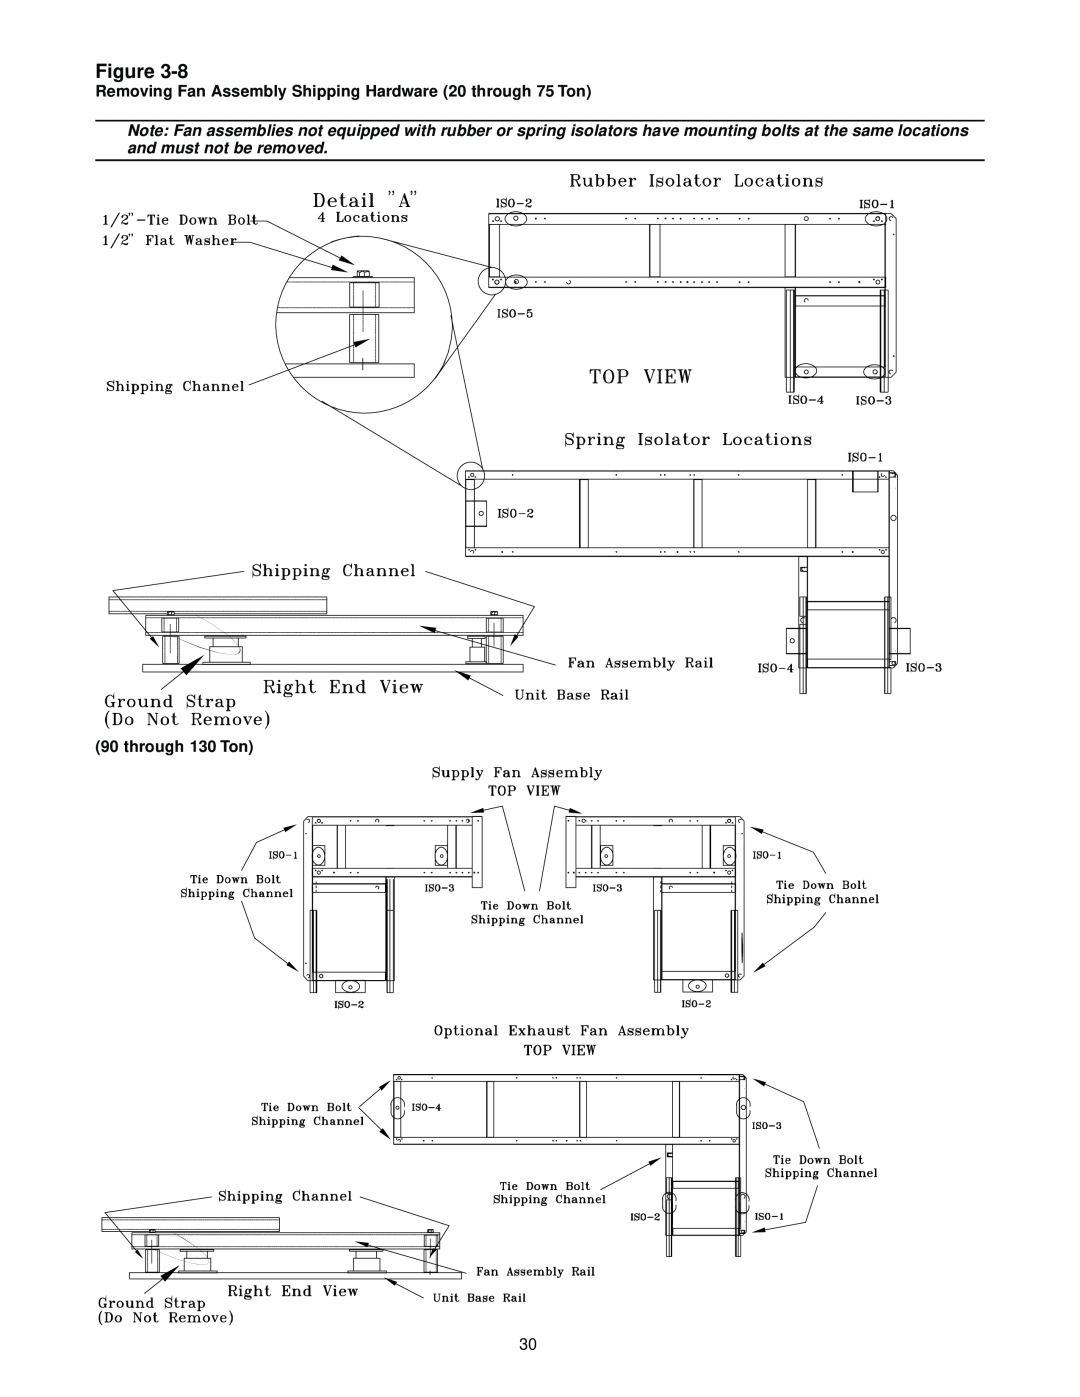 Trane RT-SVX10C-EN specifications Figure, through 130 Ton 